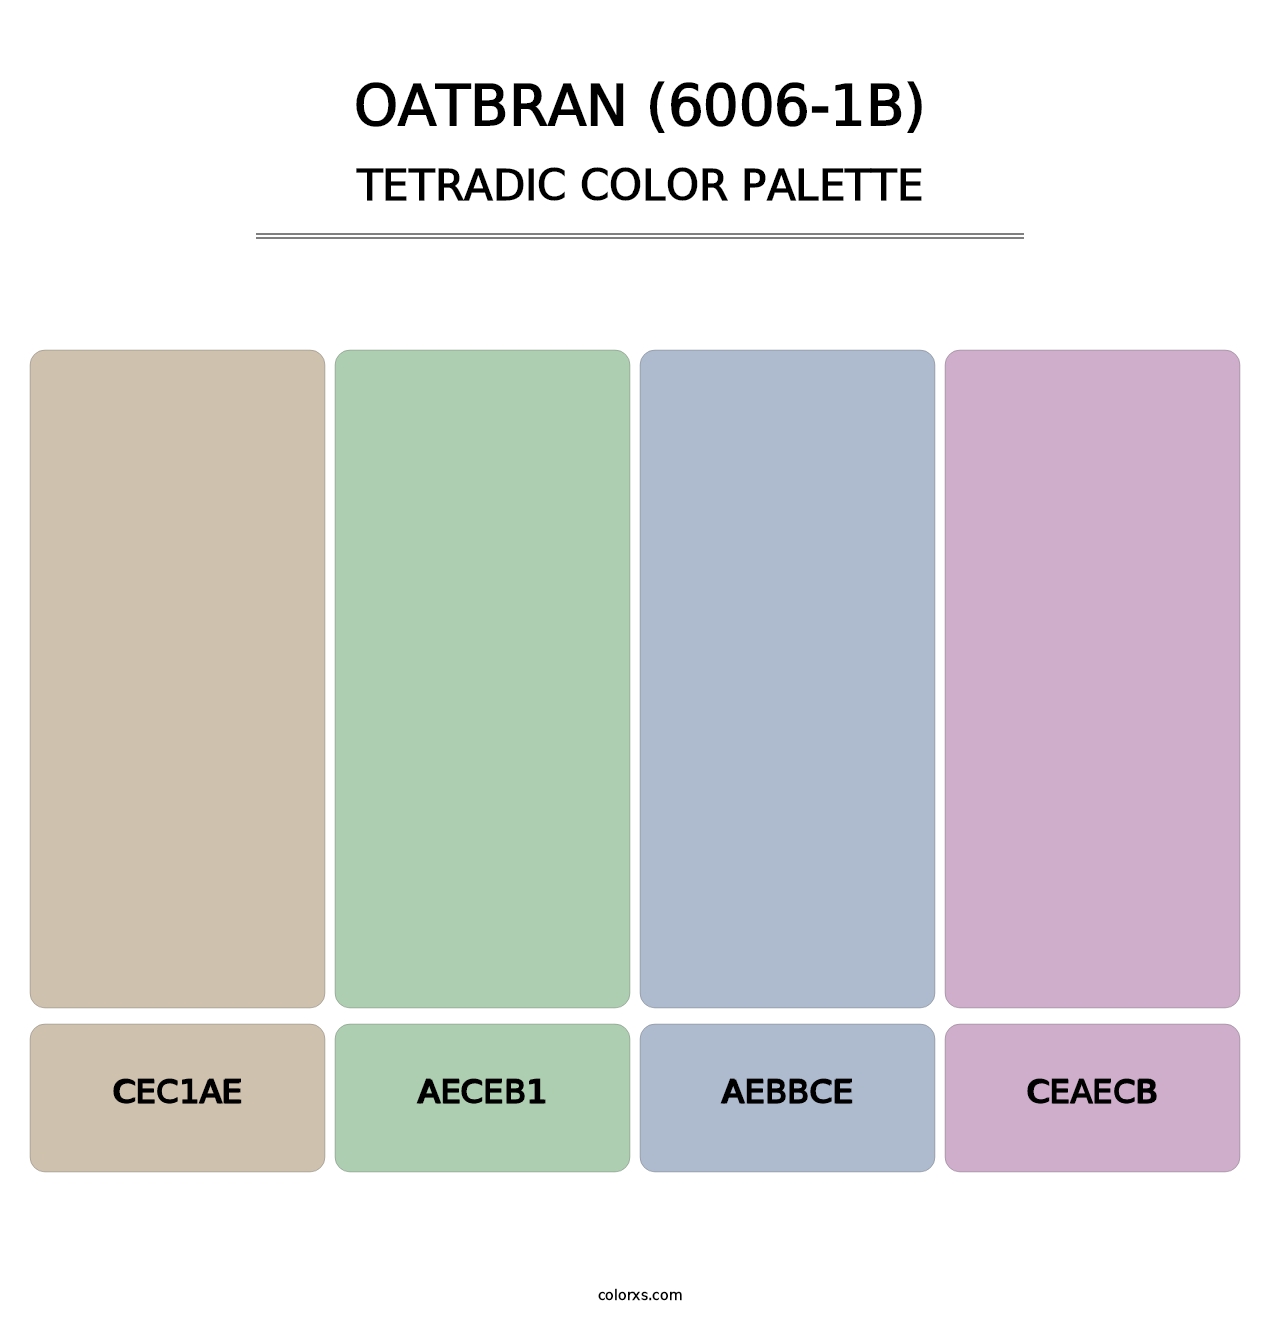 Oatbran (6006-1B) - Tetradic Color Palette